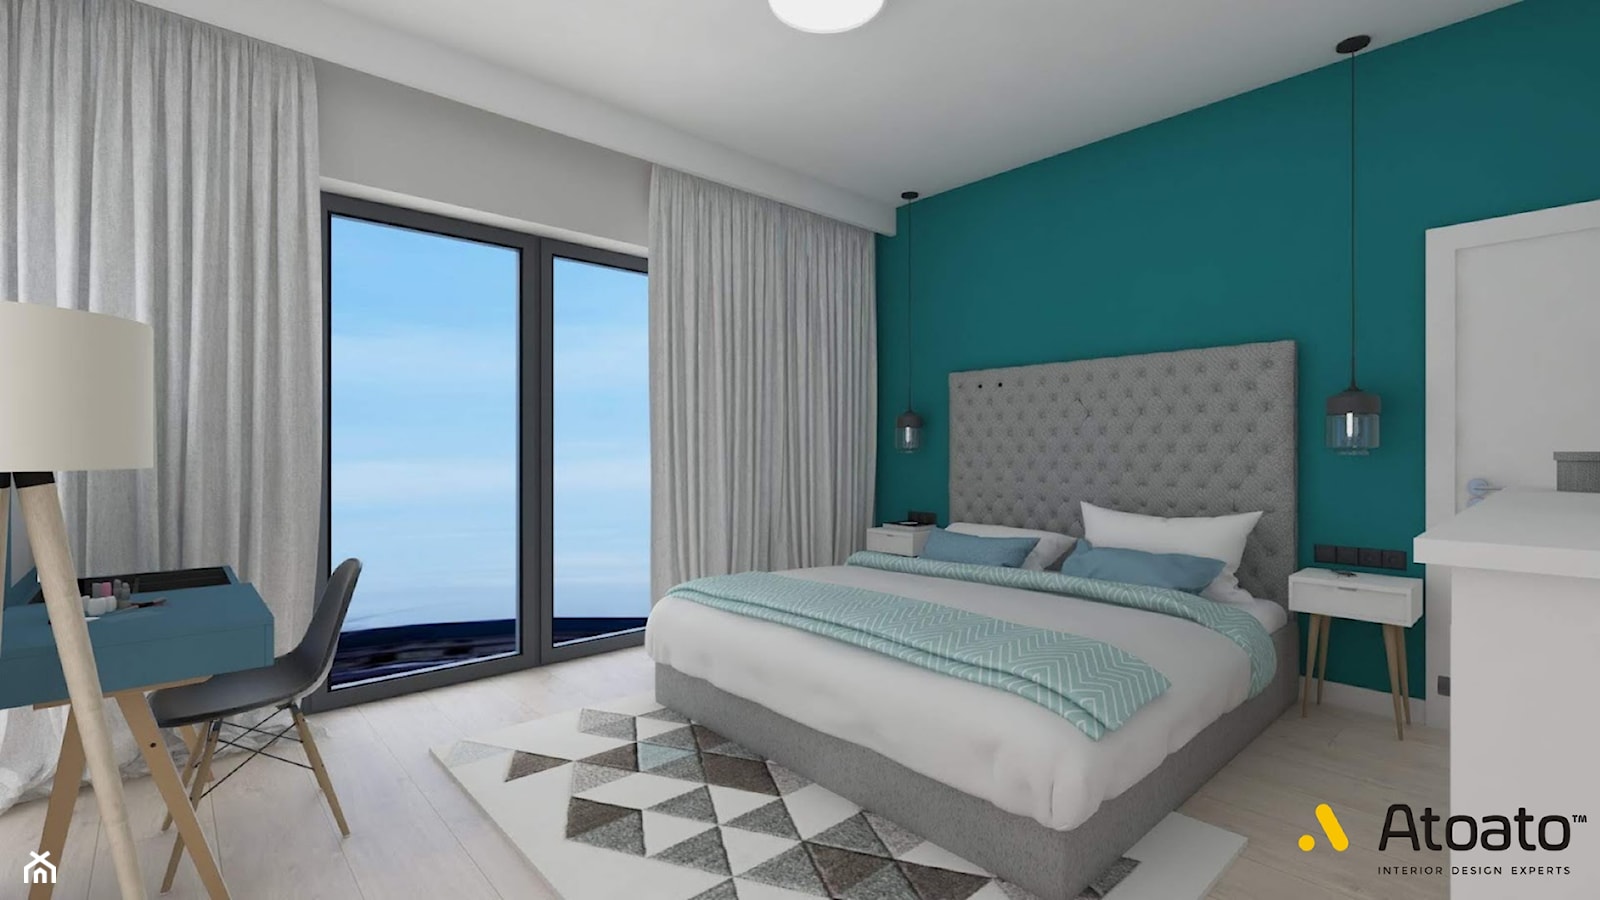 sypialnia z morskim kolorem - zdjęcie od Studio Projektowe Atoato - Homebook